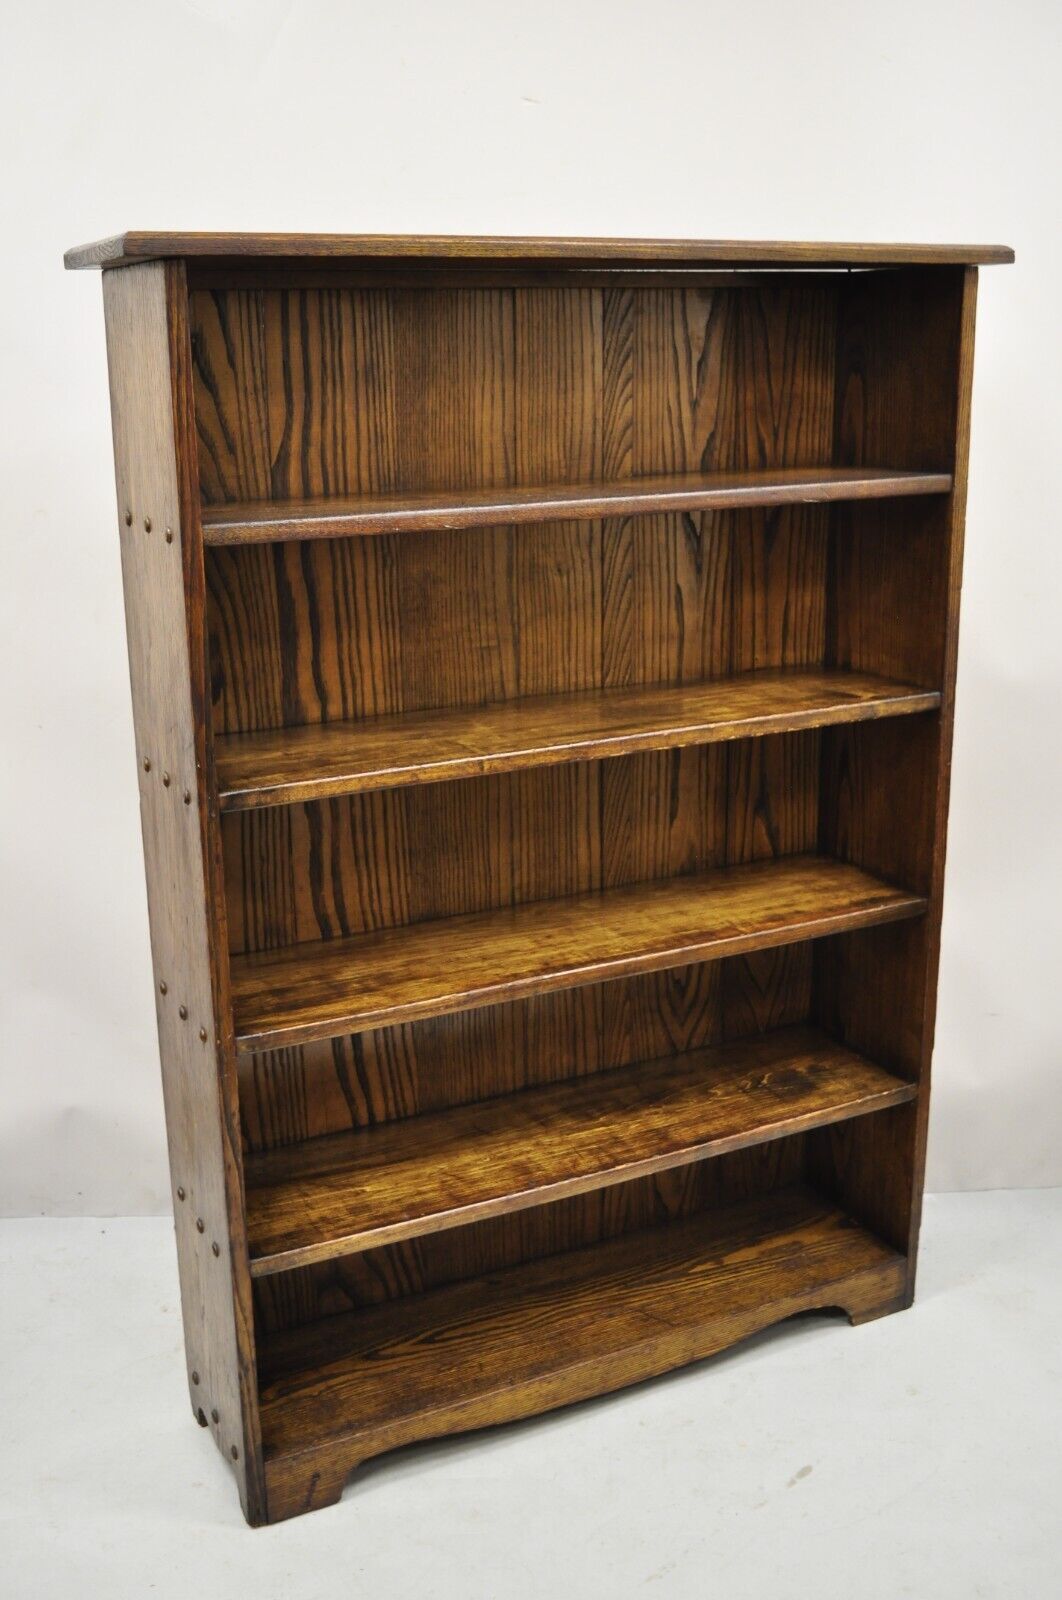 Vintage Pine and Oak Wood 5 Shelf Arts & Crafts Mission Style Bookcase